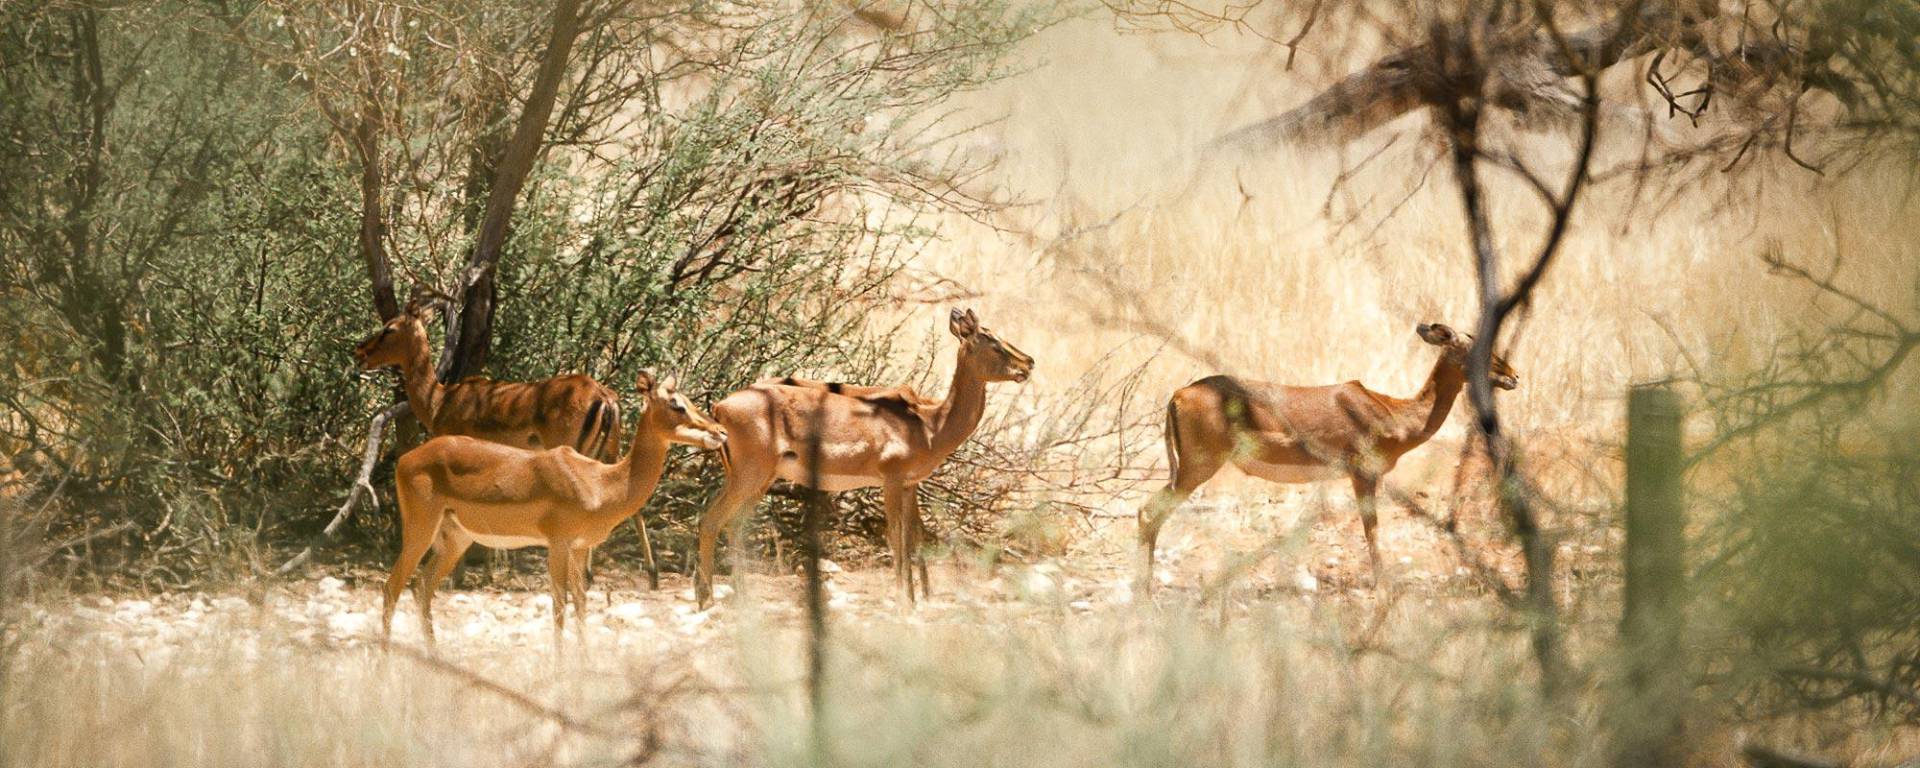 Impala in the namibian bush